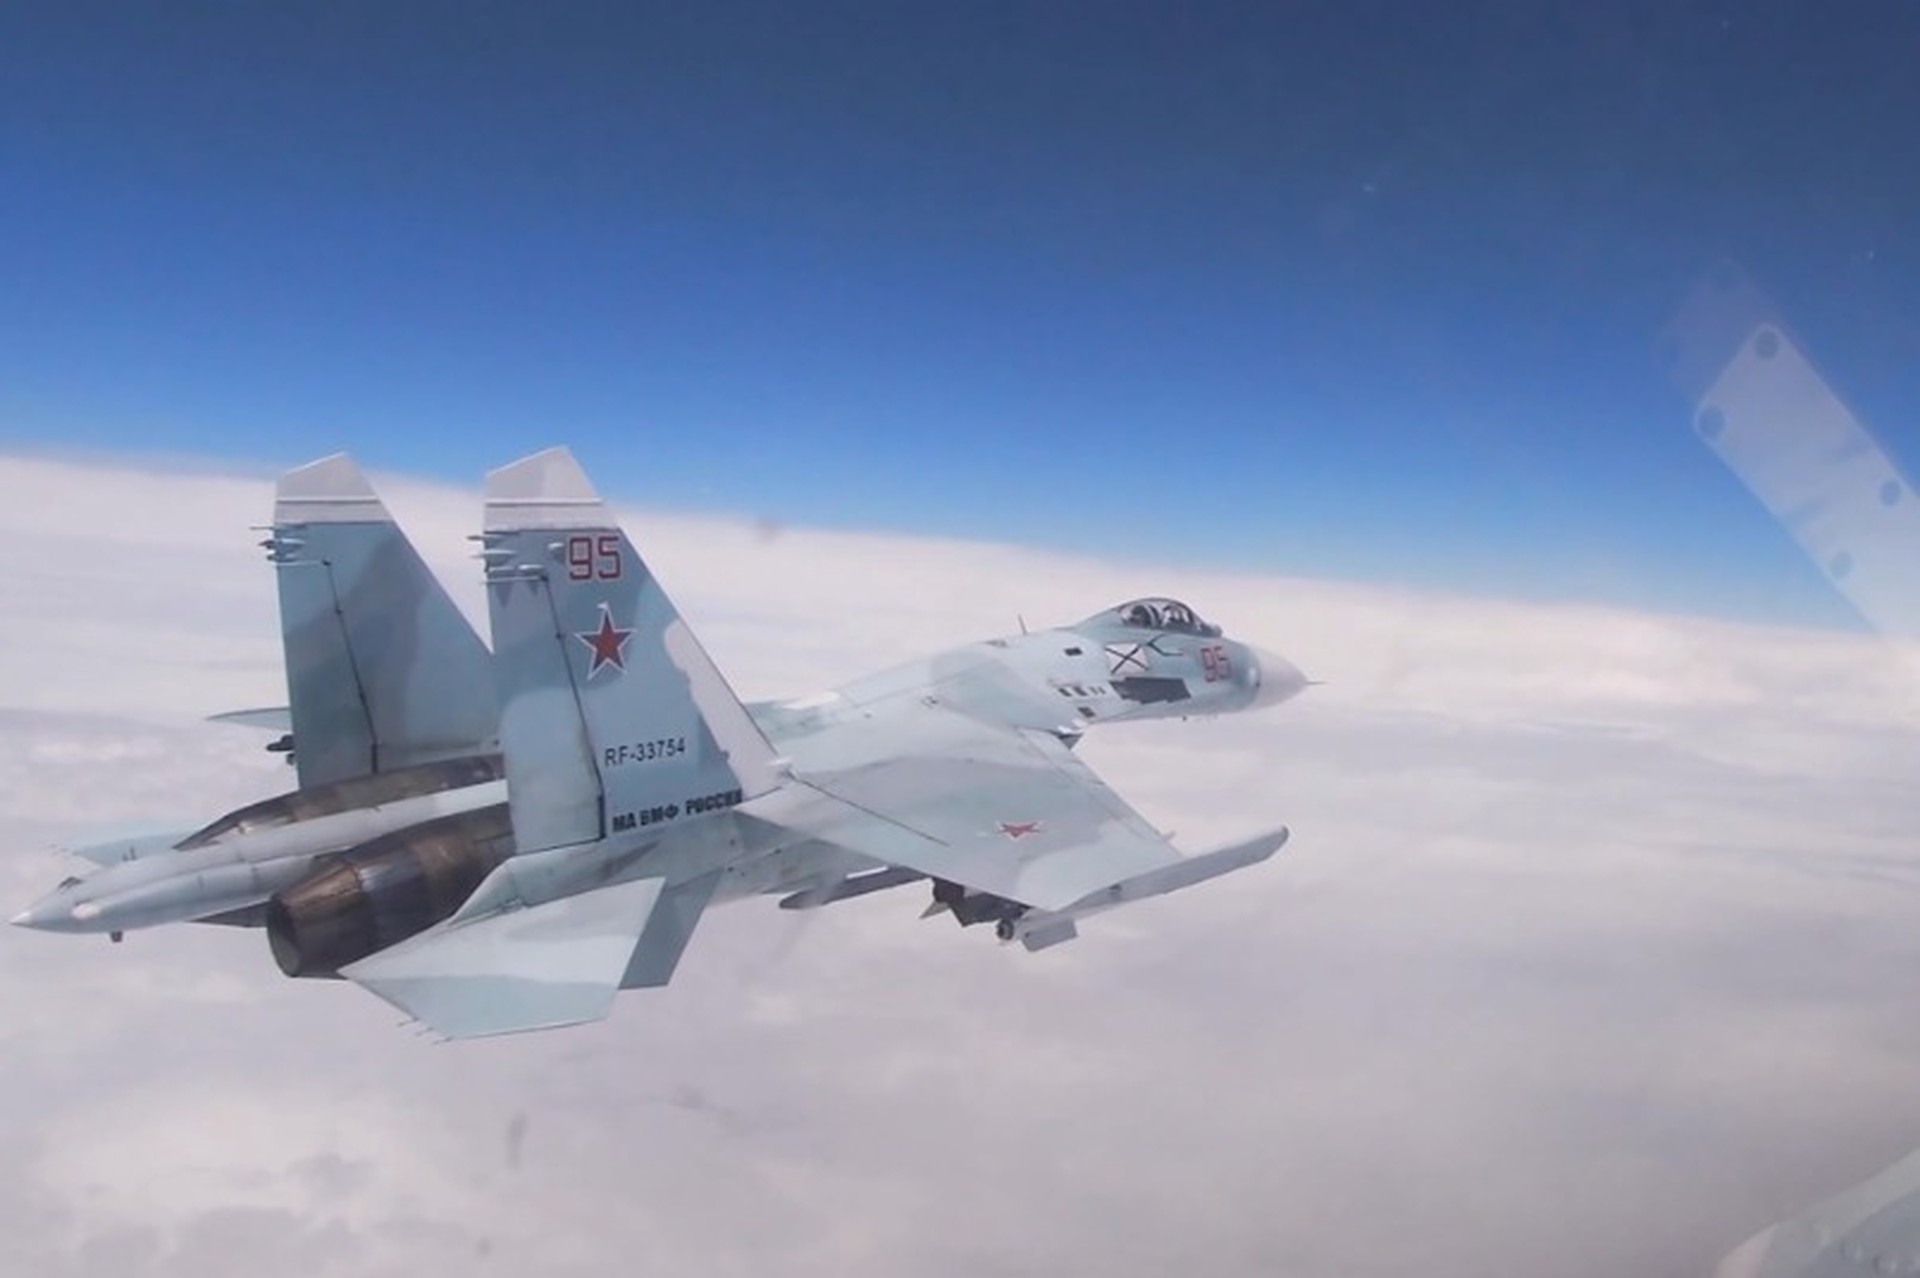 СМИ: Превосходство Су-27 над F-15 может повлиять на борьбу сил НАТО и России